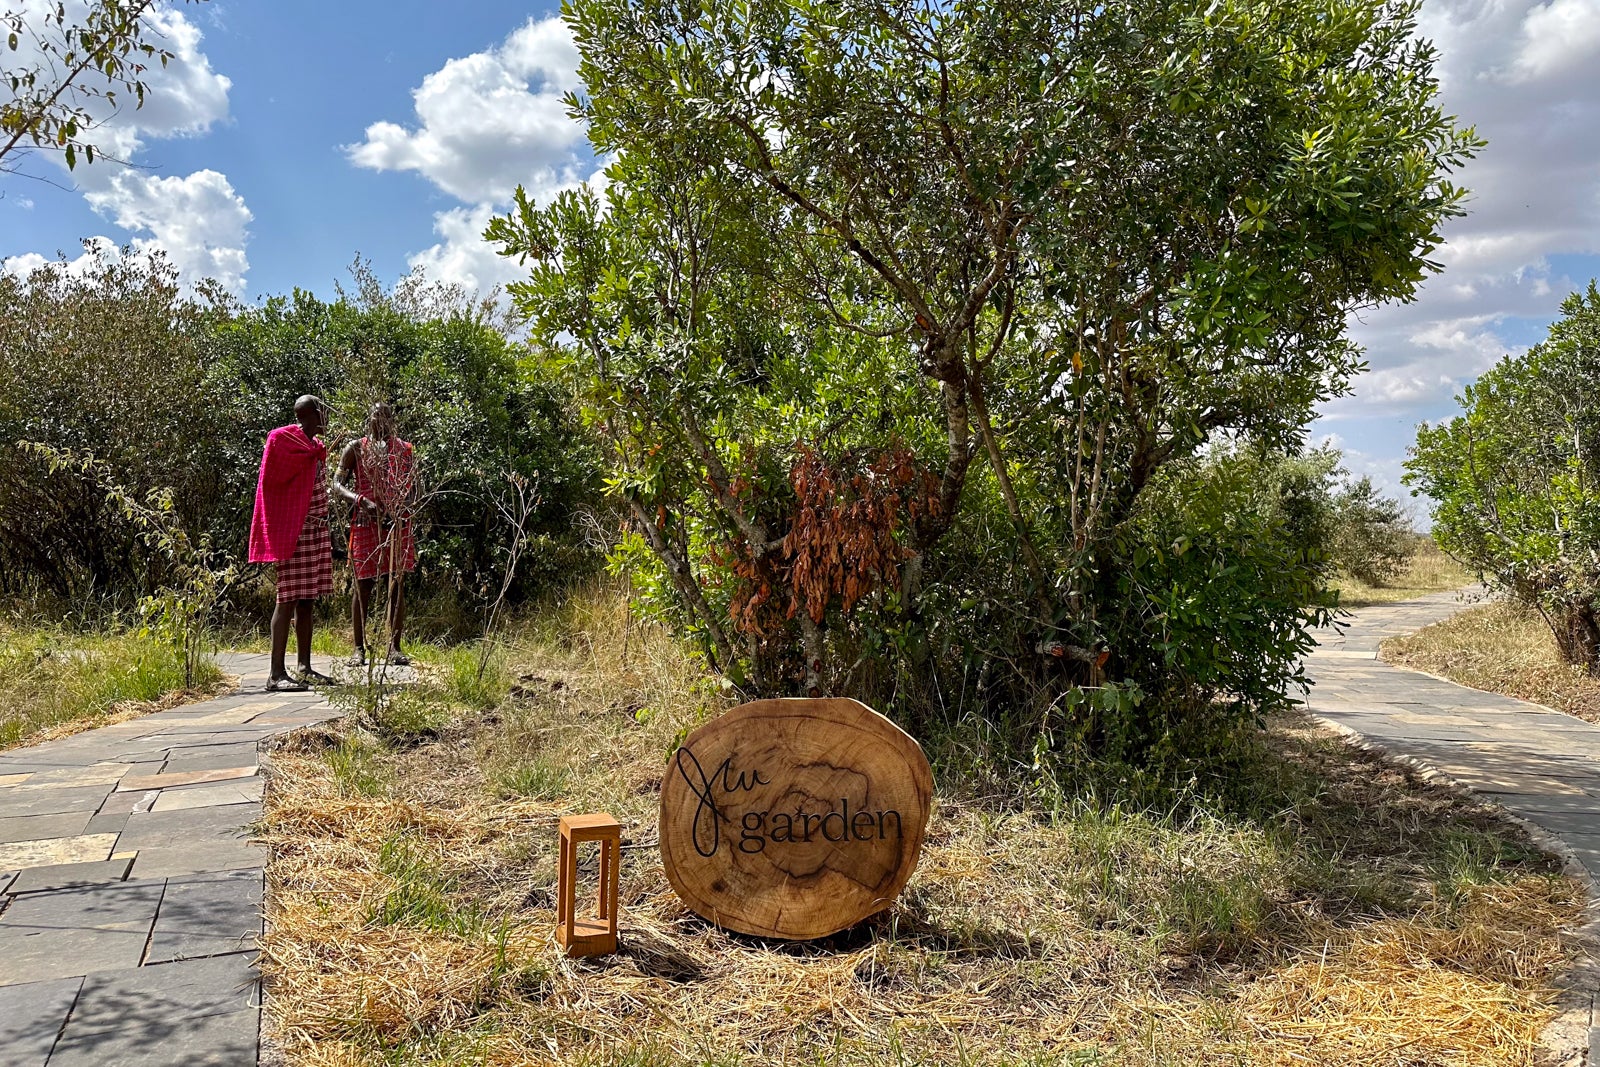 best luxury safari lodges in masai mara